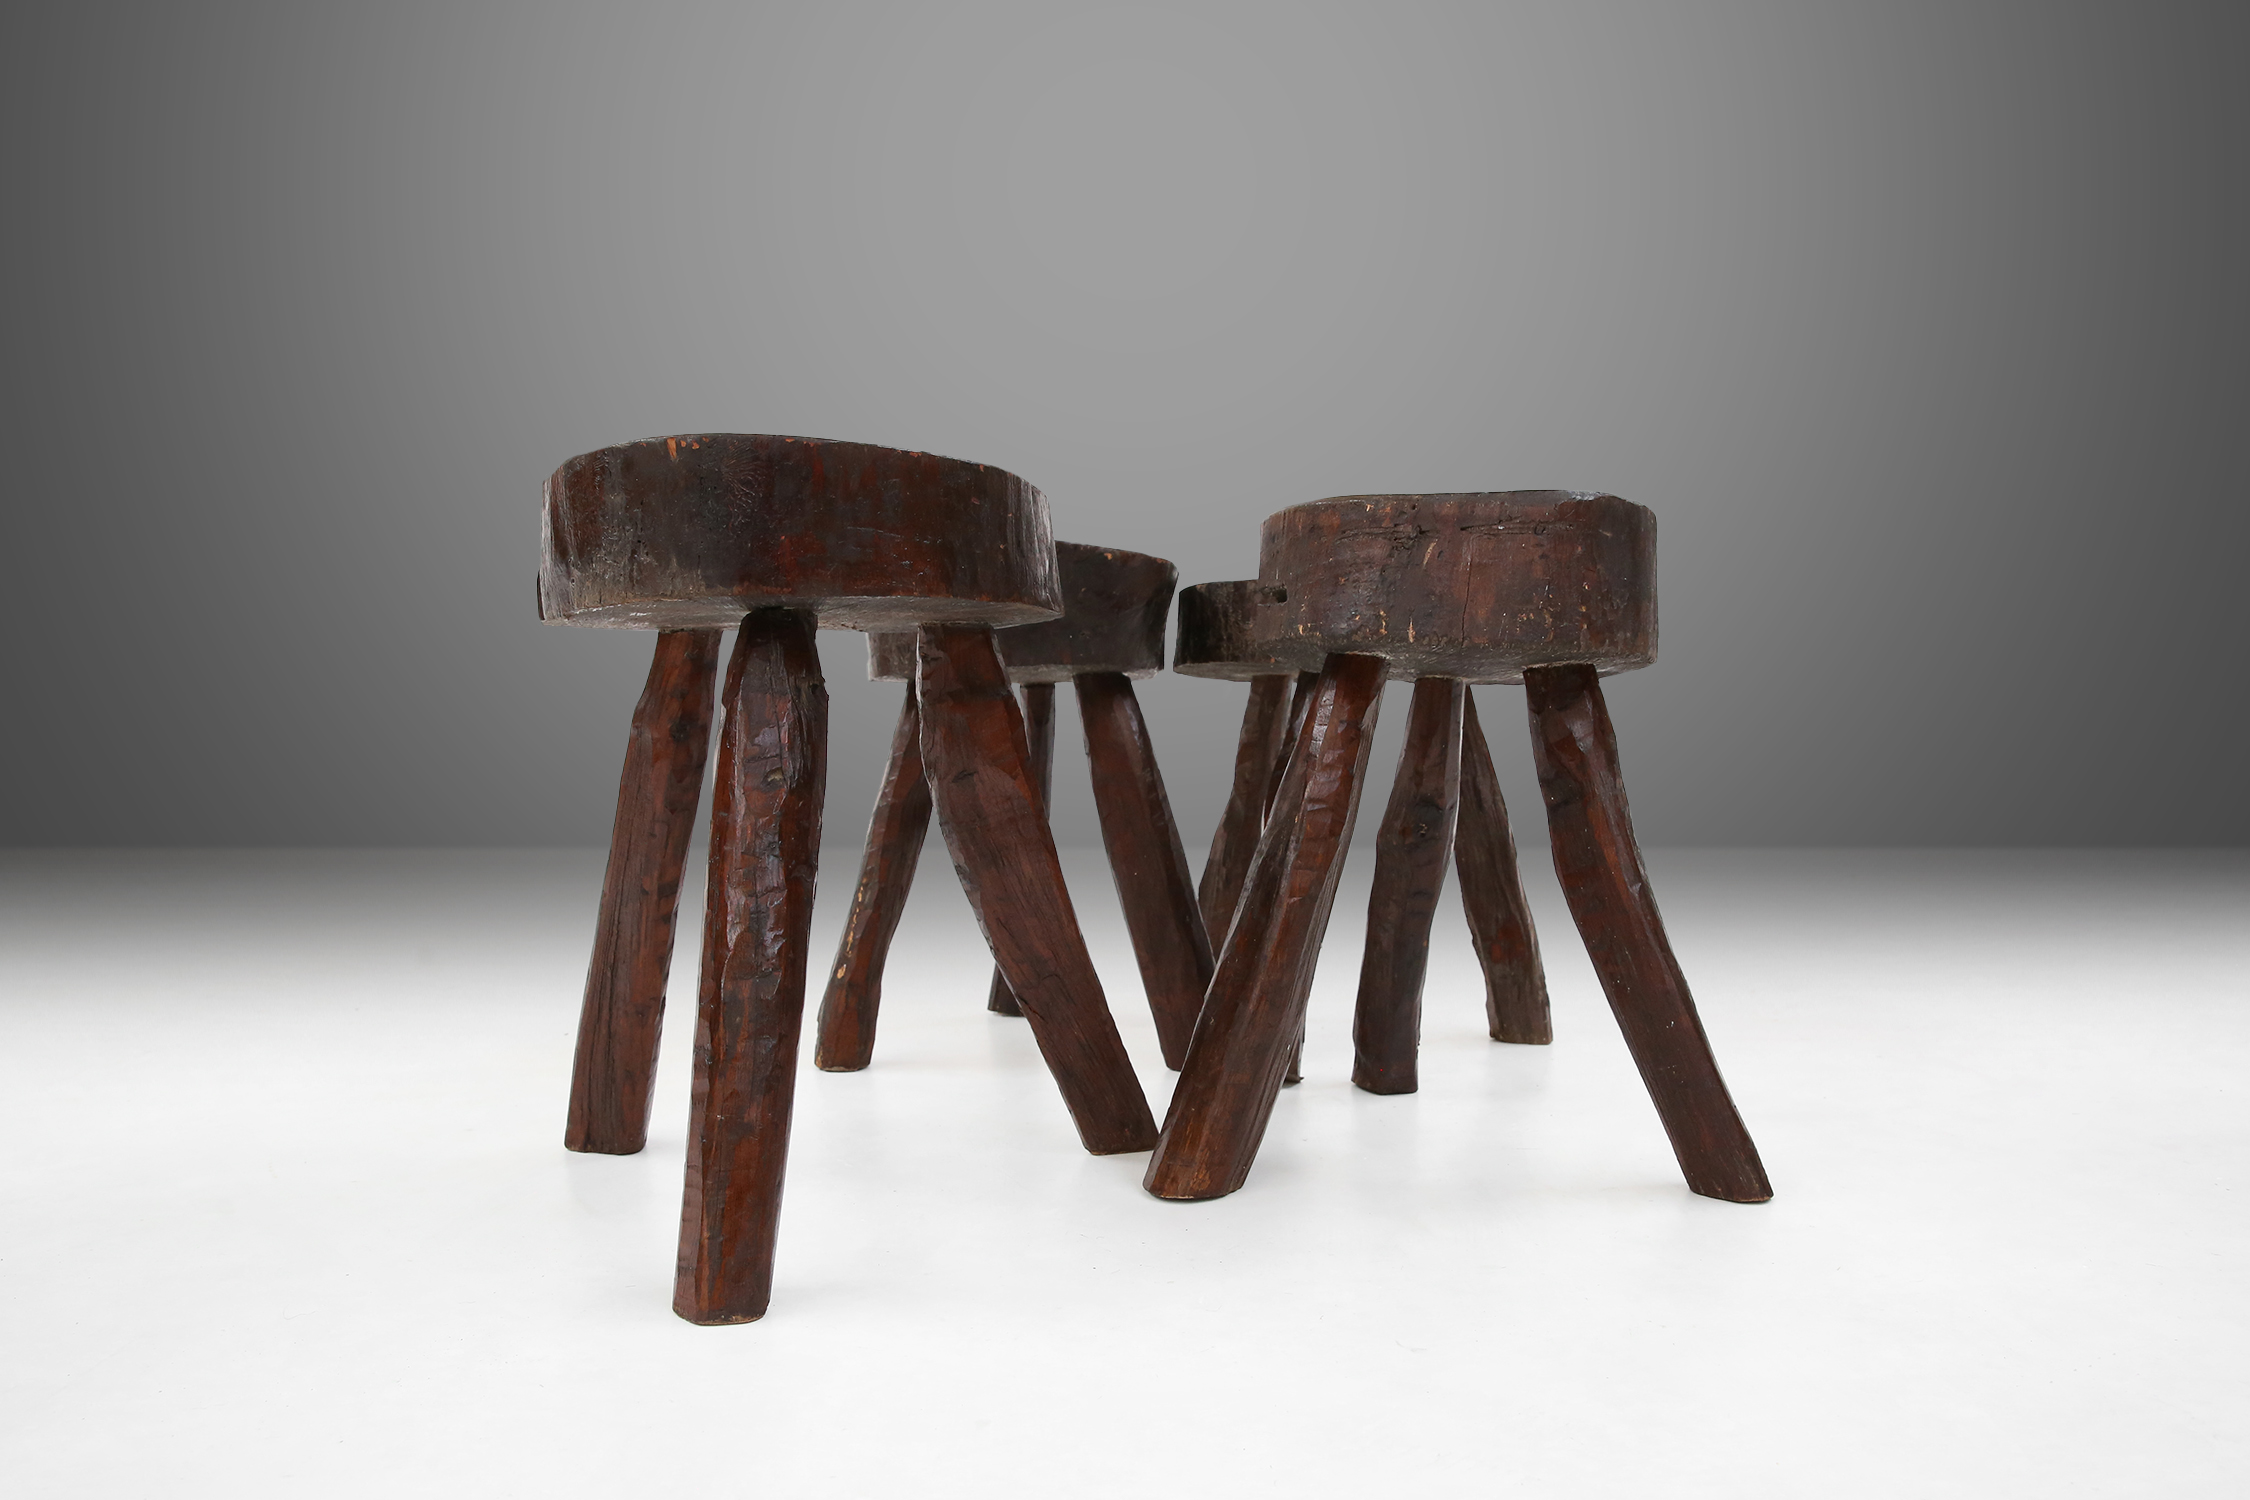 Set of four 19th century rustic handmade stools